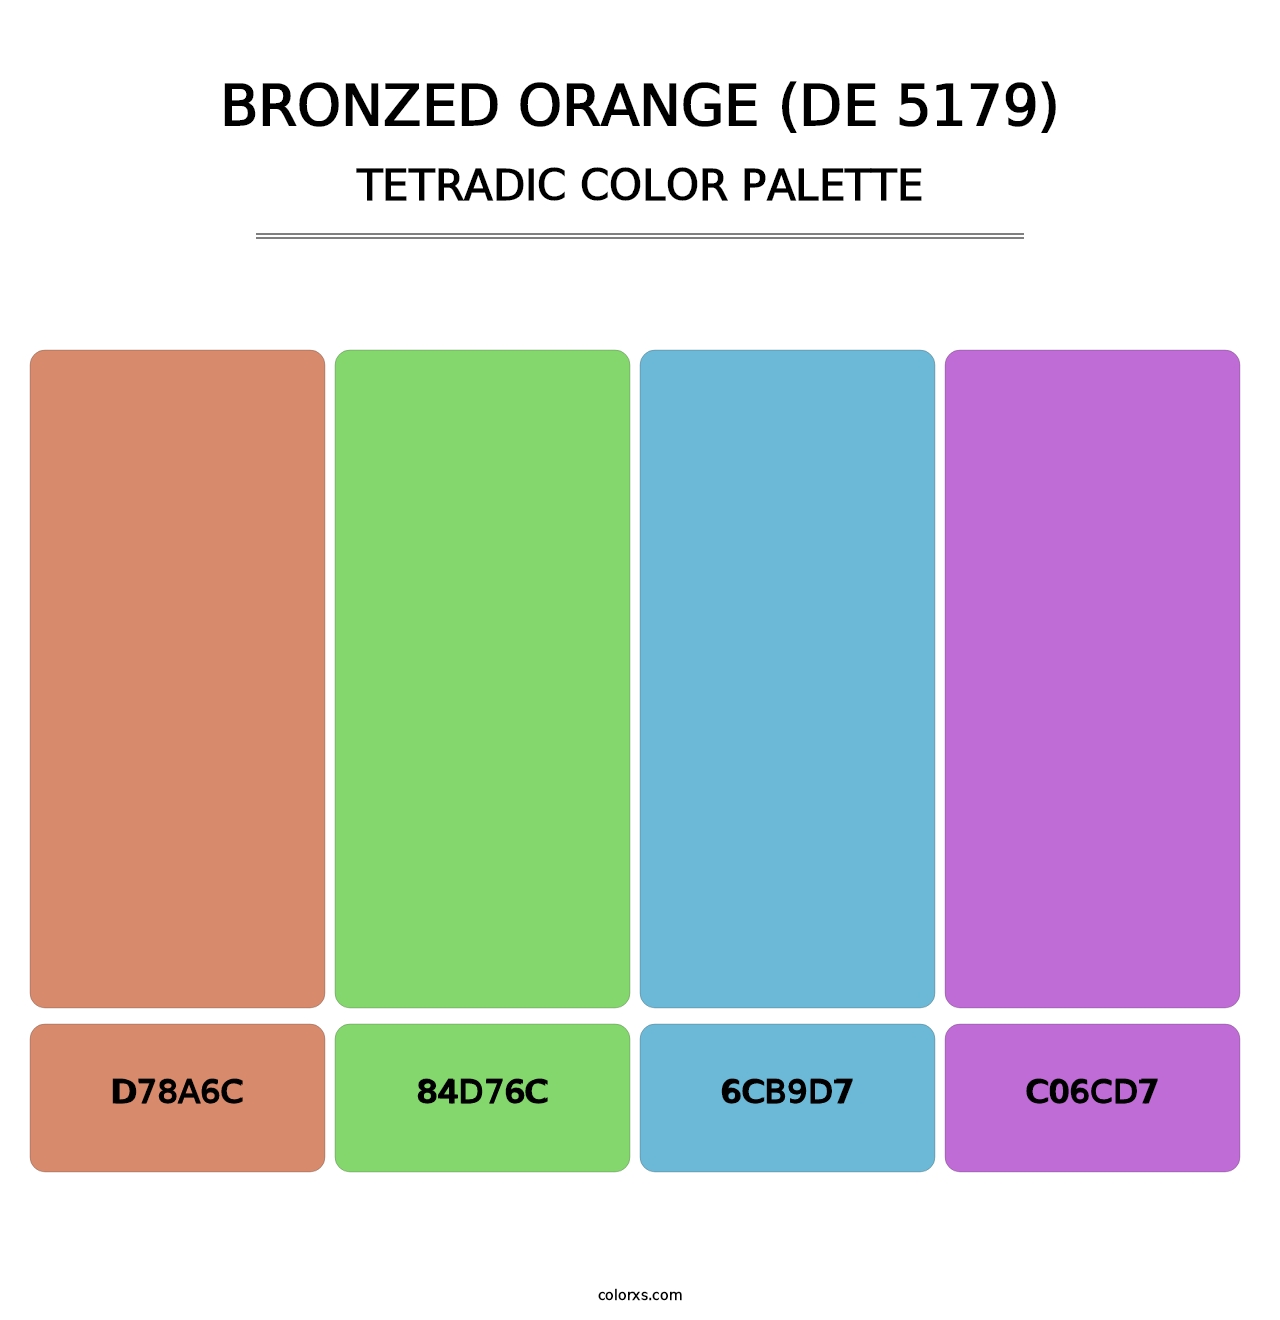 Bronzed Orange (DE 5179) - Tetradic Color Palette